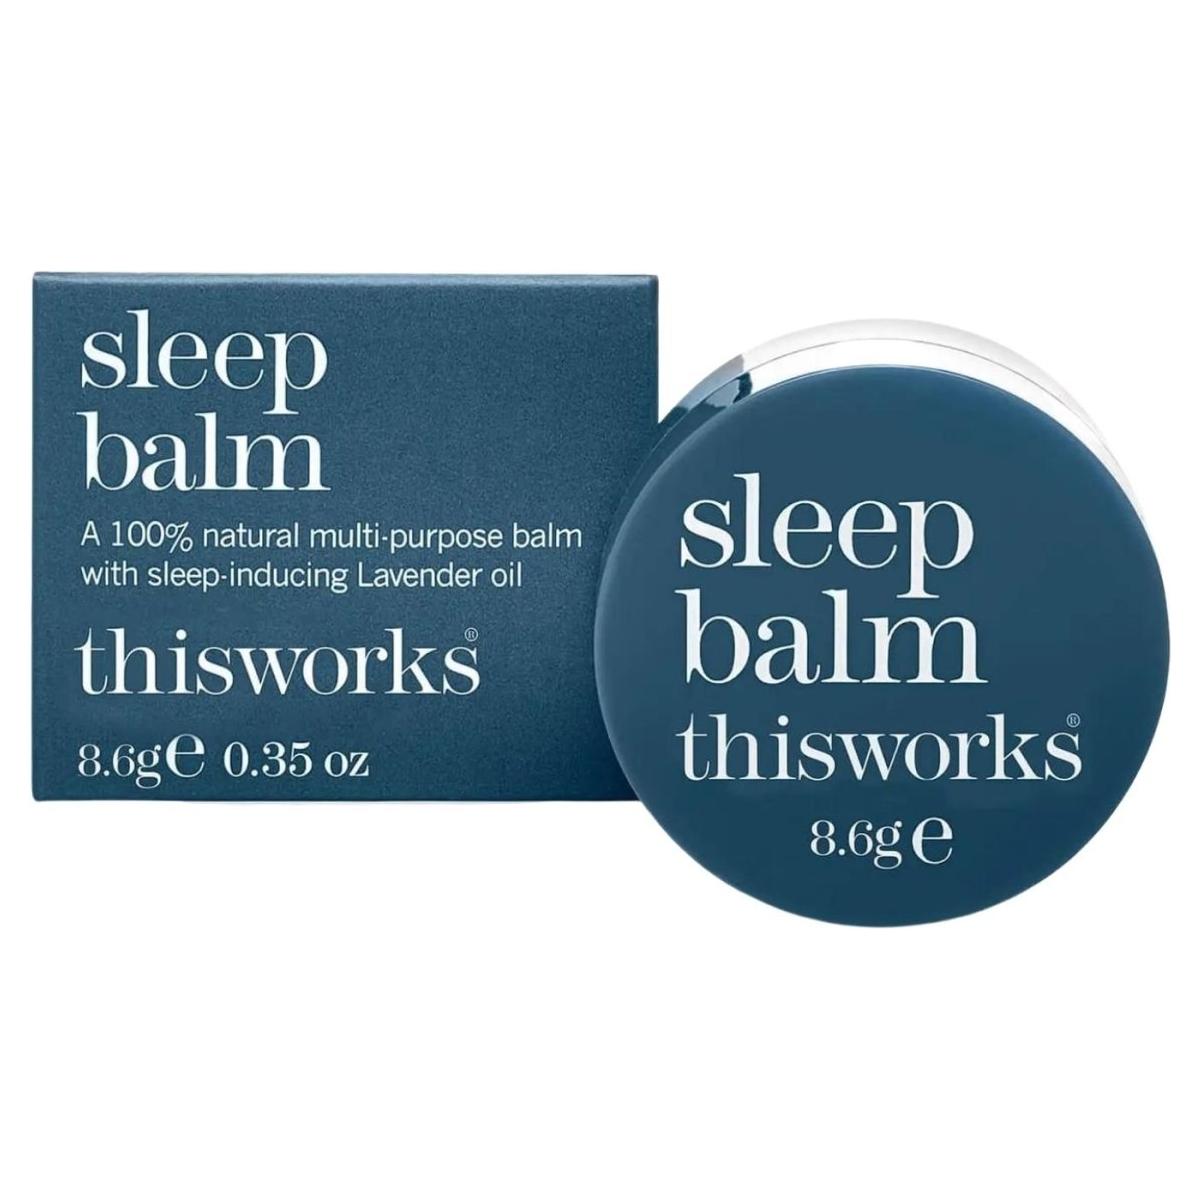 this works | Sleep Balm - DG International Ventures Limited